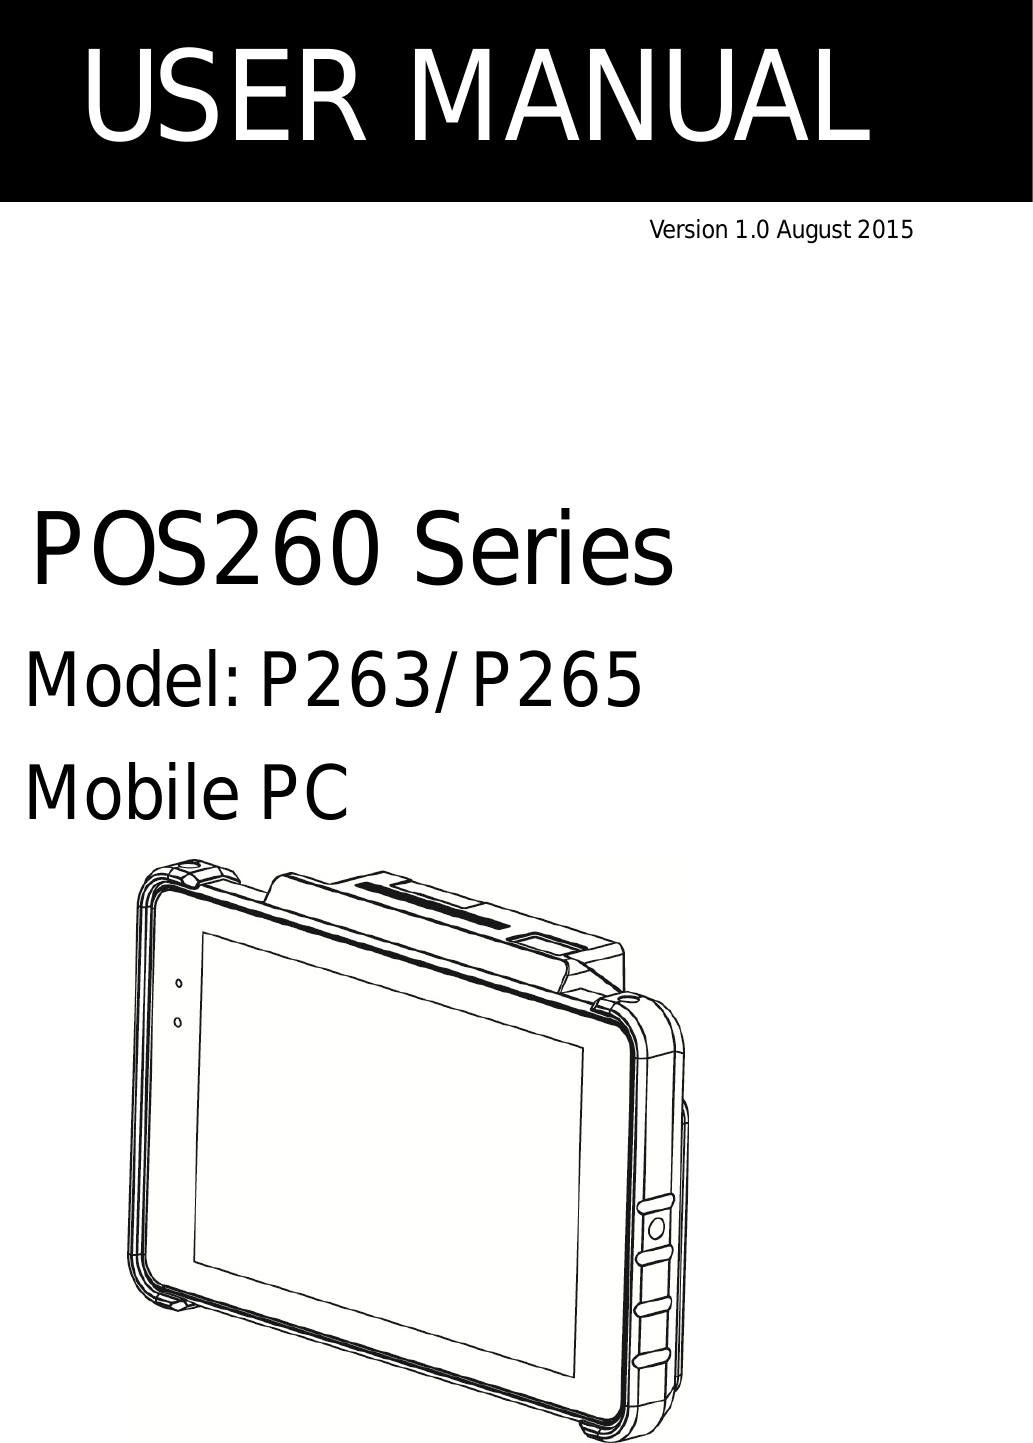            Version 1.0 August 2015       POS260 Series Model: P263/P265 Mobile PC           USER MANUAL 